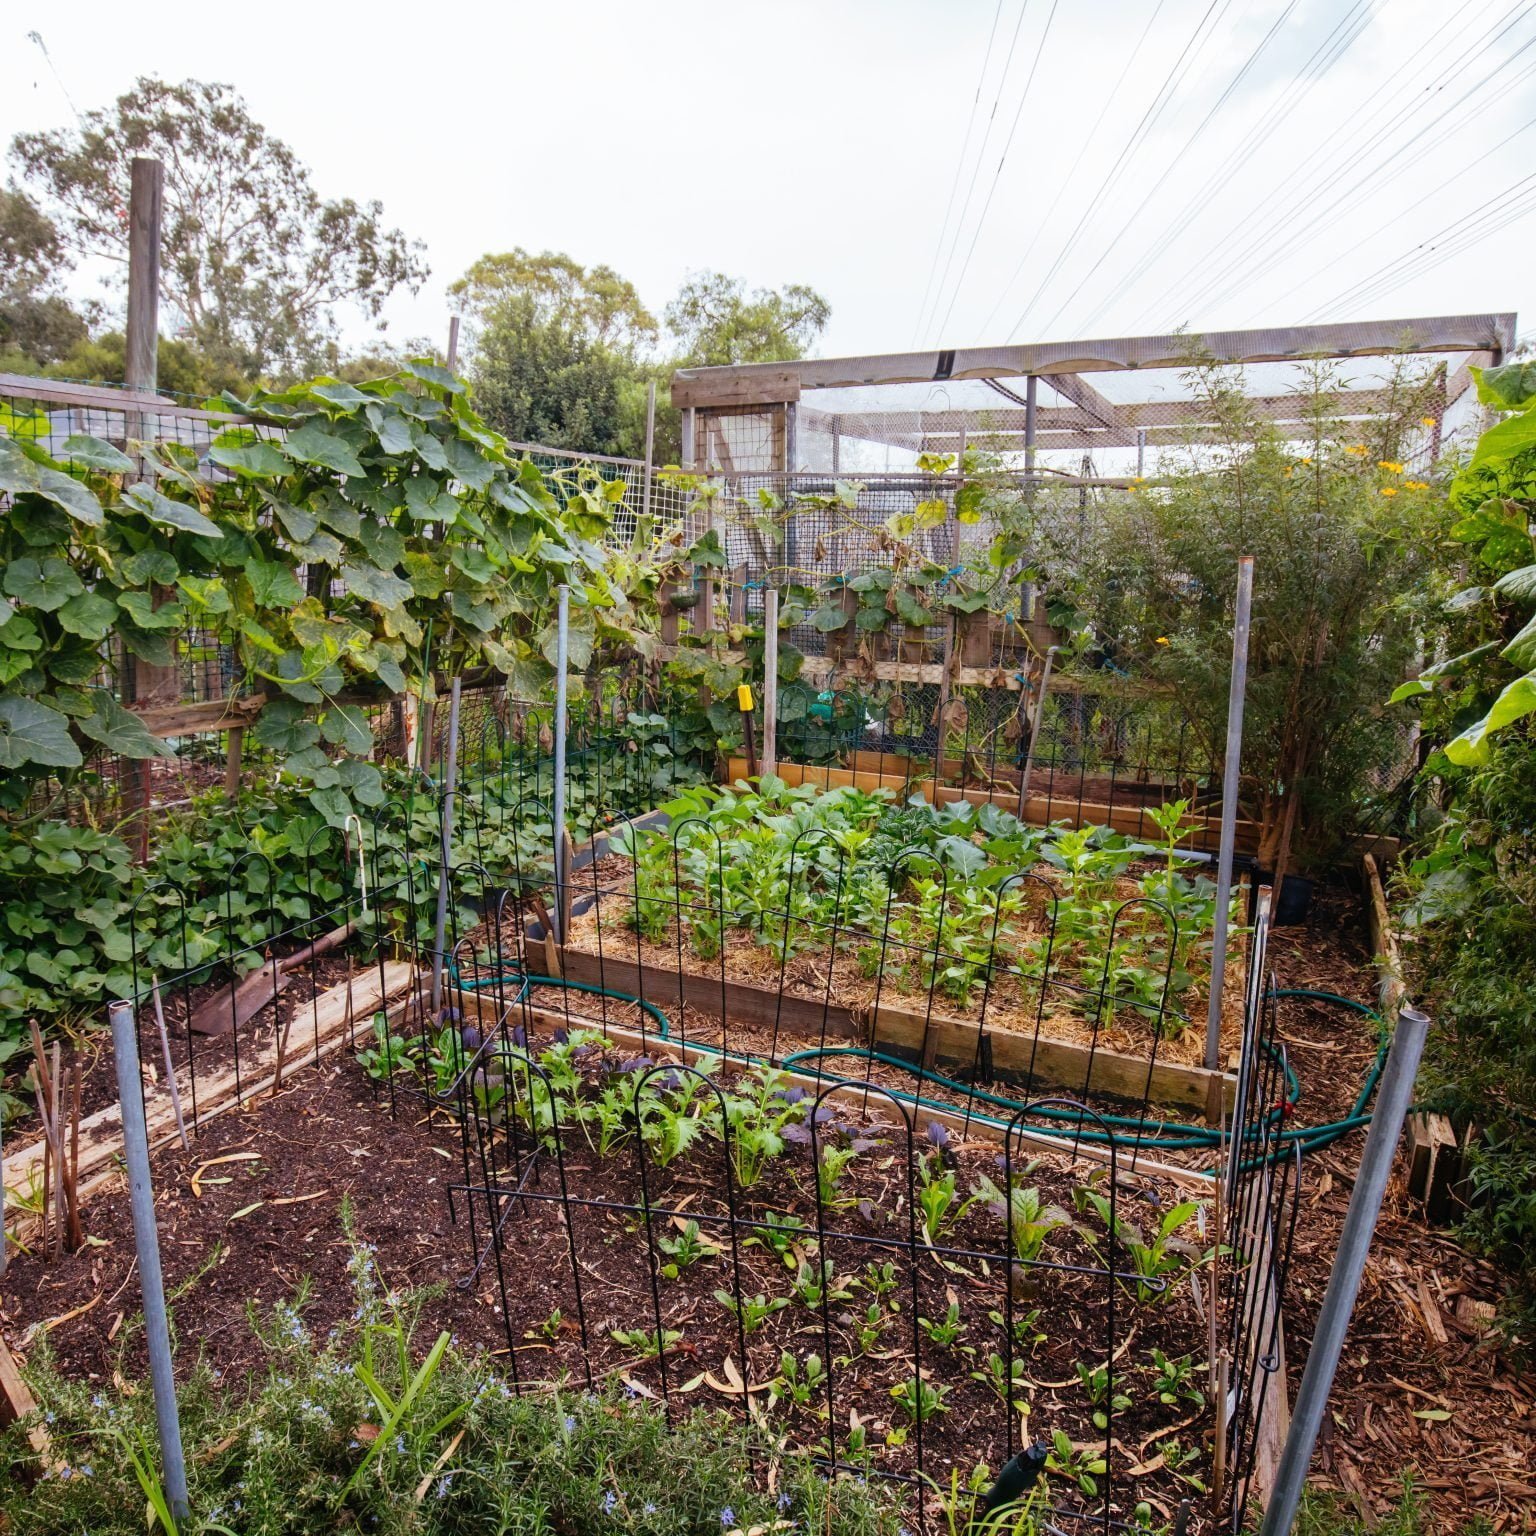 urban garden plot in australia 2021 09 03 04 15 45 utc Philippines: Urban gardening eyed to boost agri-tourism, food sufficiency